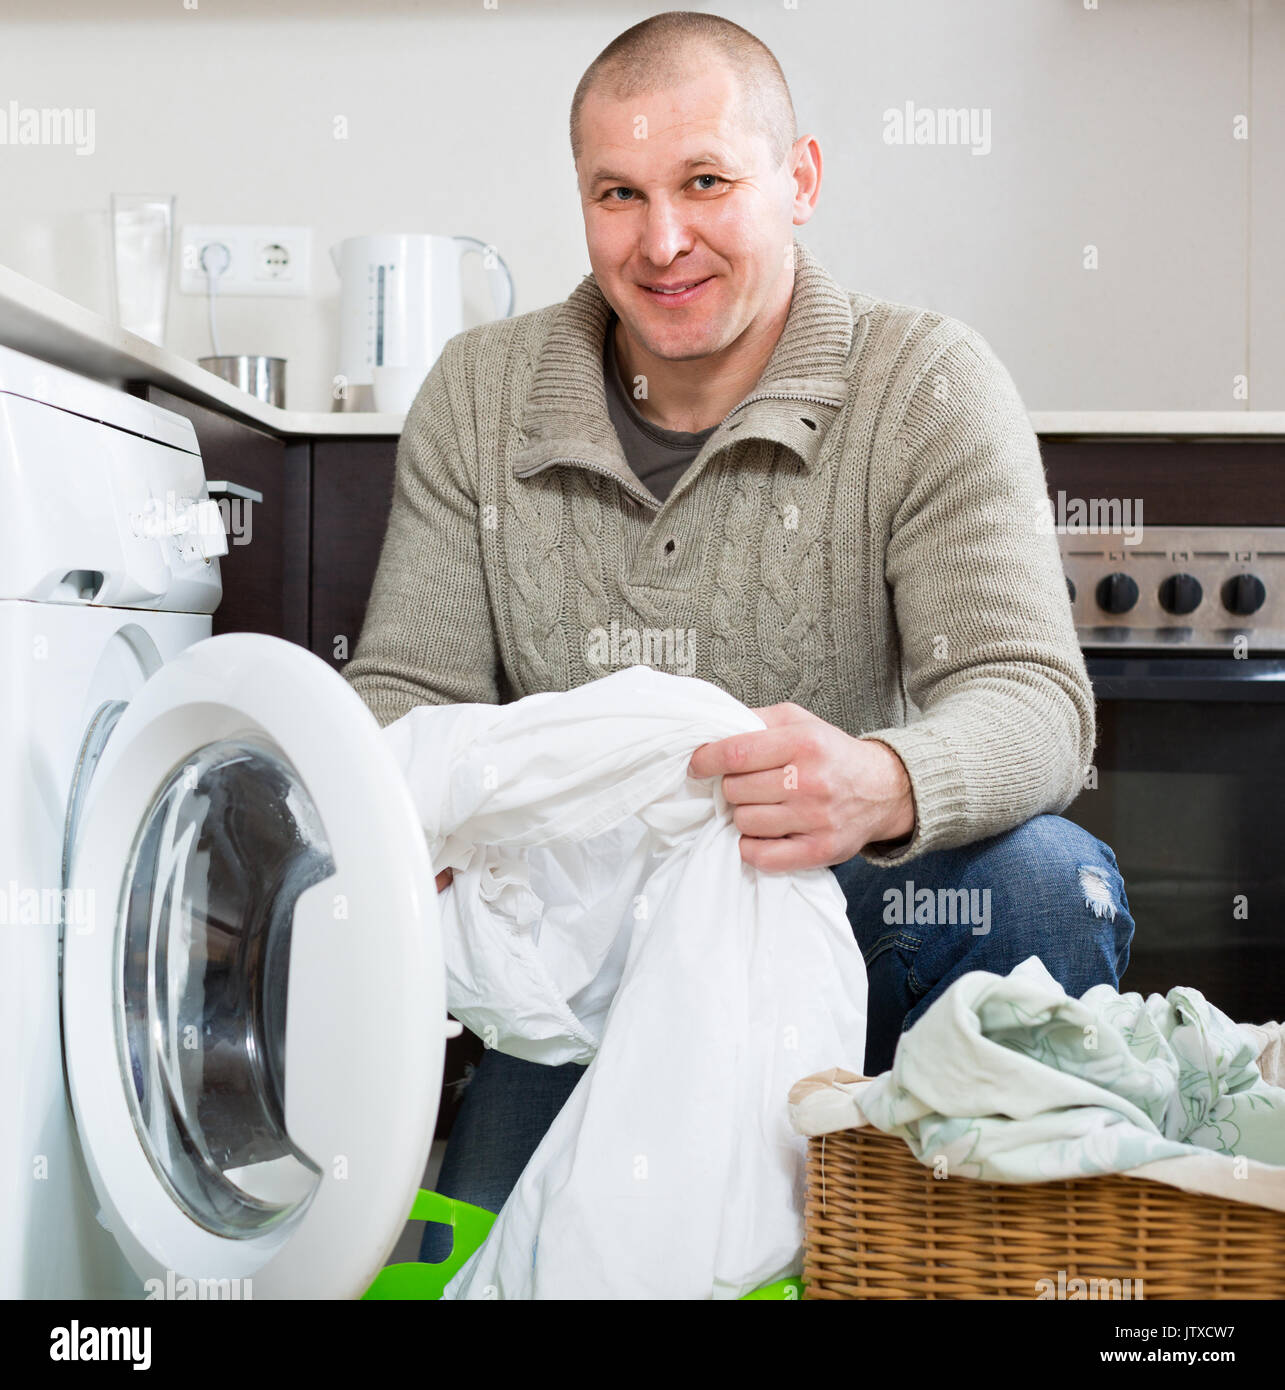 Home laundry. Happy smiling man using washing machine at home Stock Photo